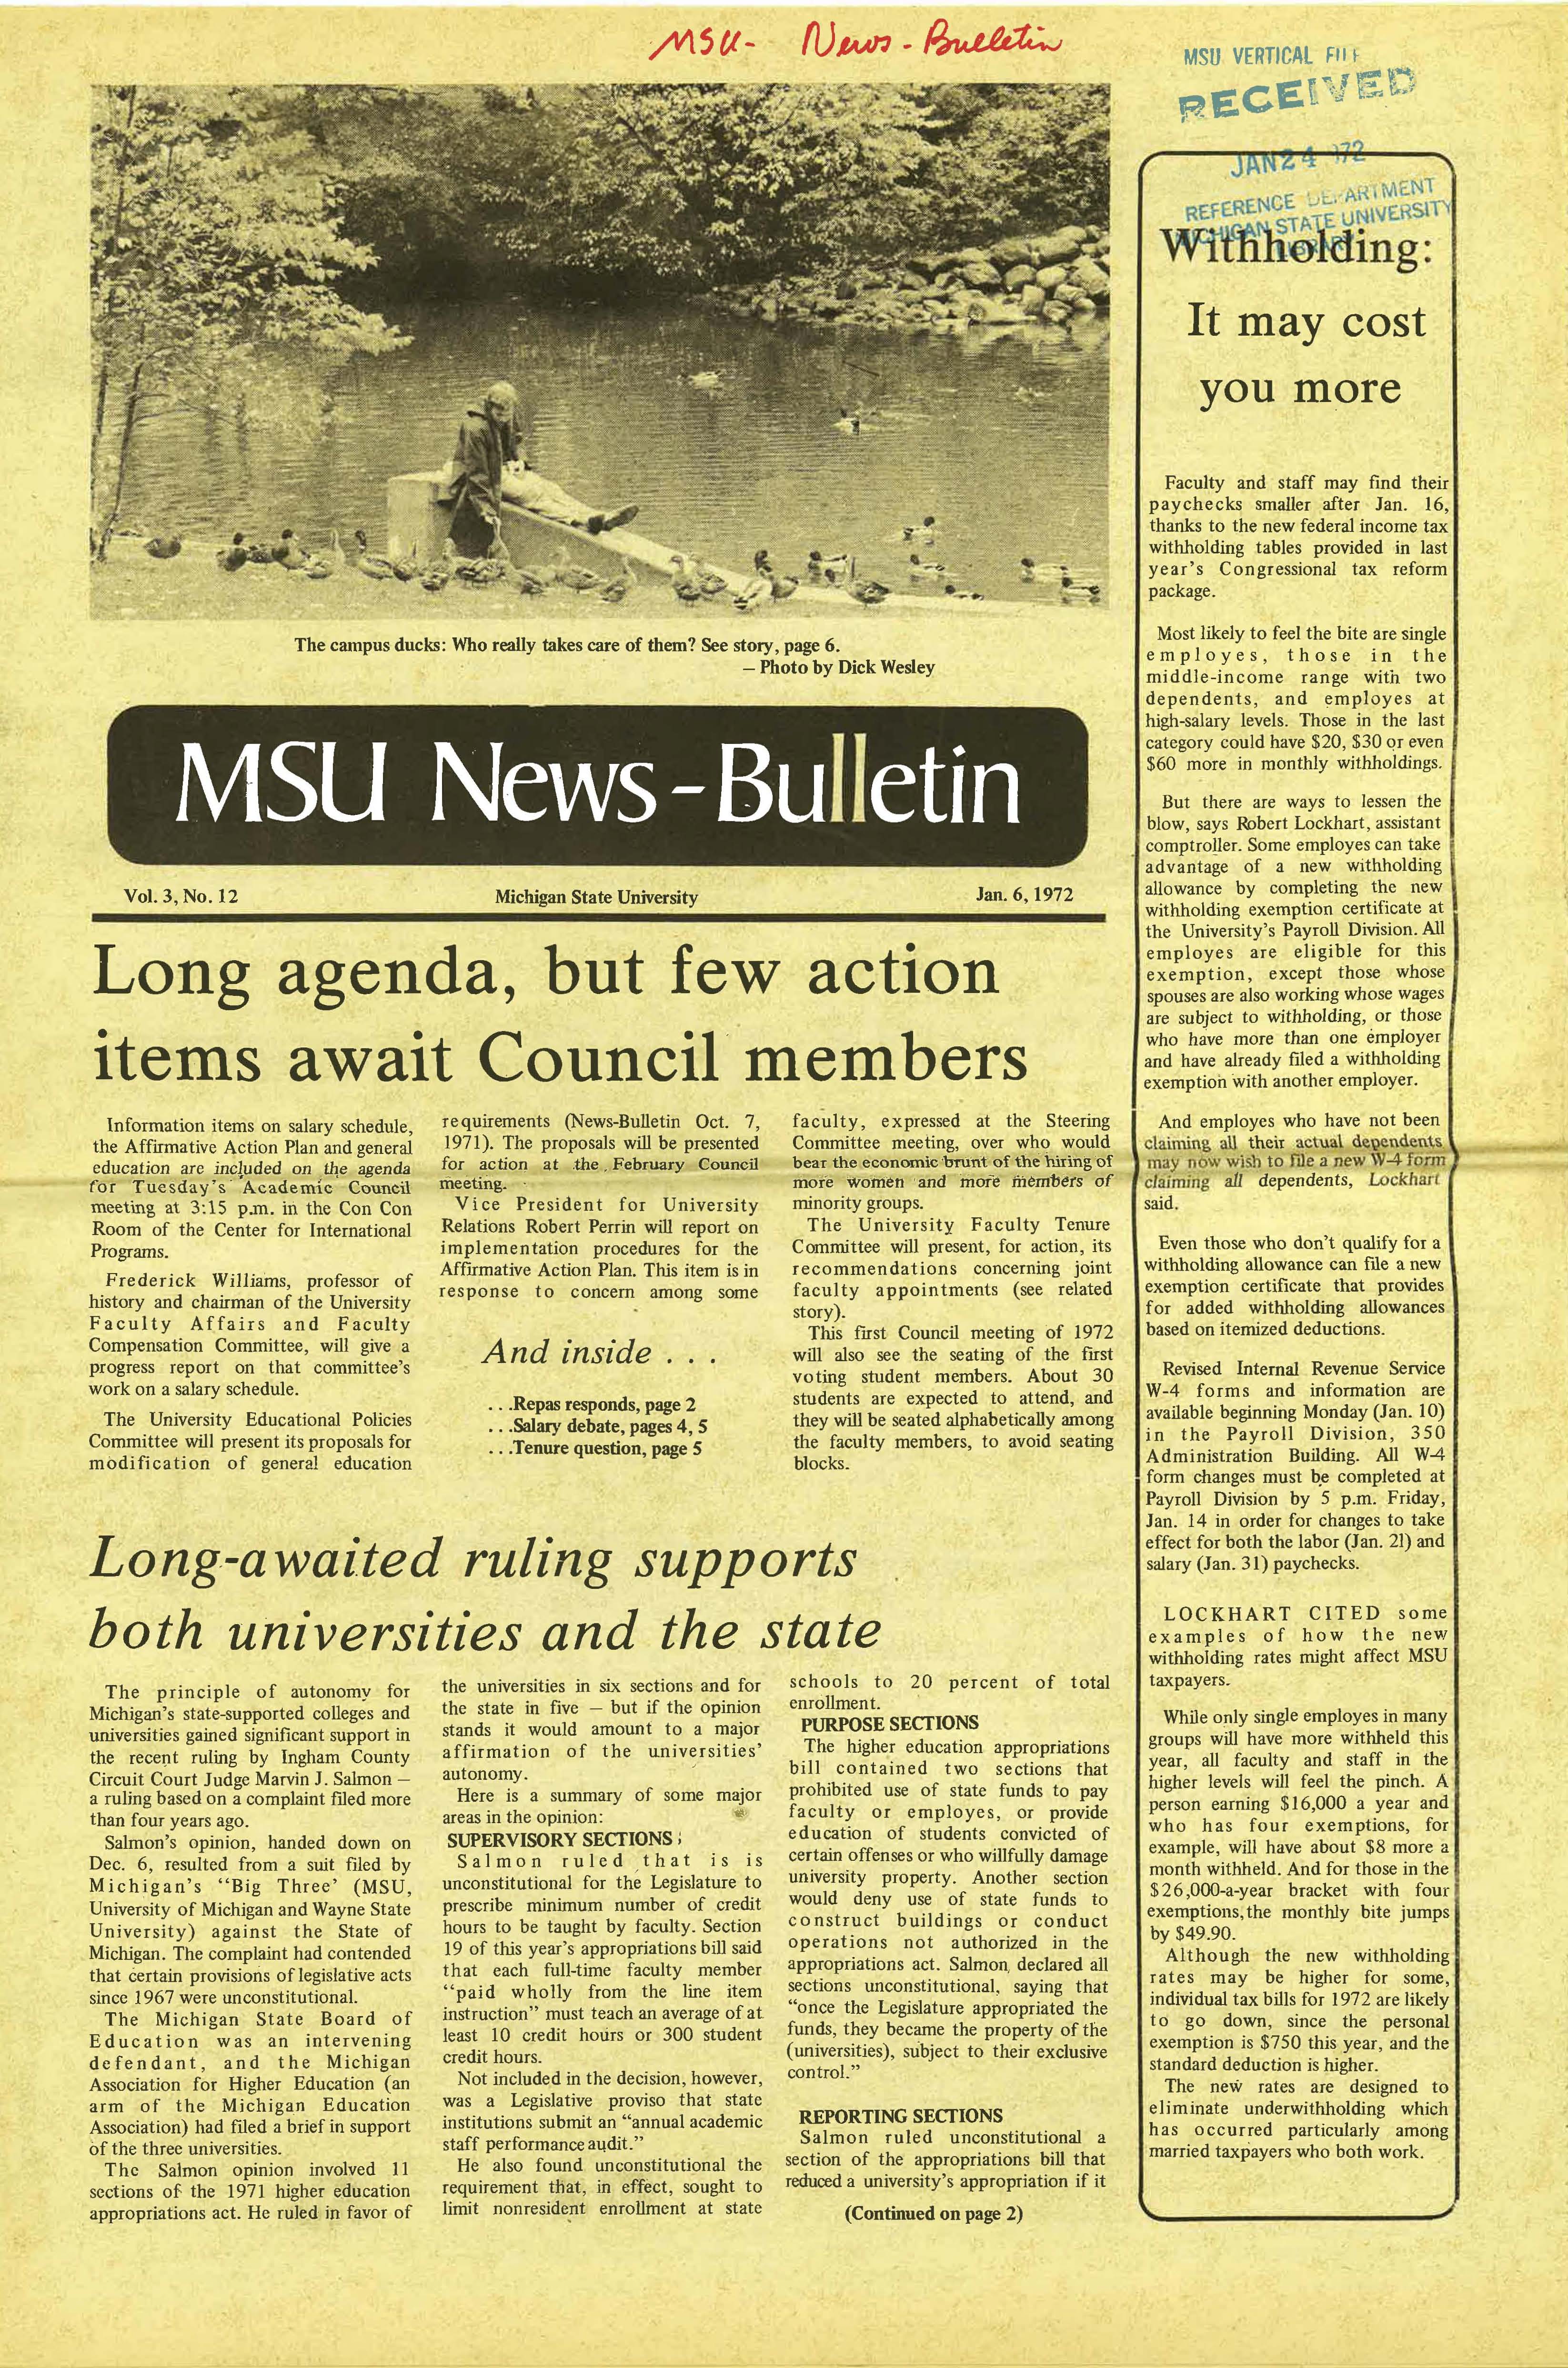 MSU News Bulletin, vol. 3, No. 21, March 9, 1972